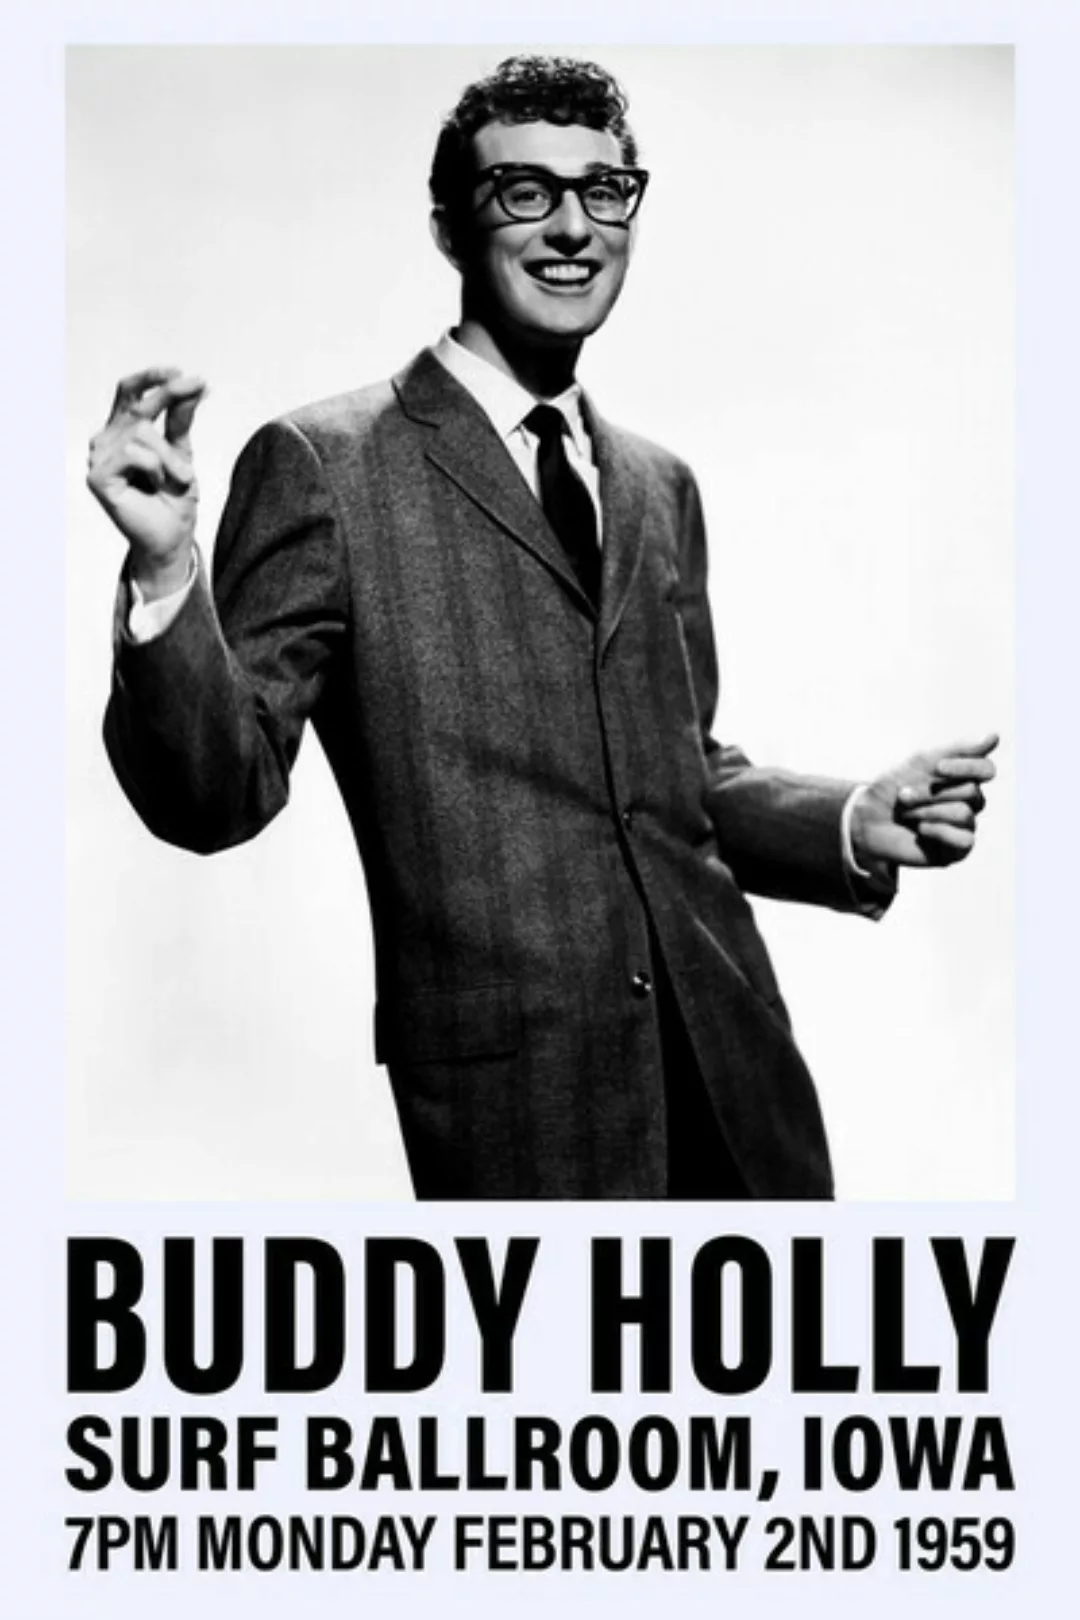 Poster / Leinwandbild - Buddy Holly In The Surf Ballroom günstig online kaufen